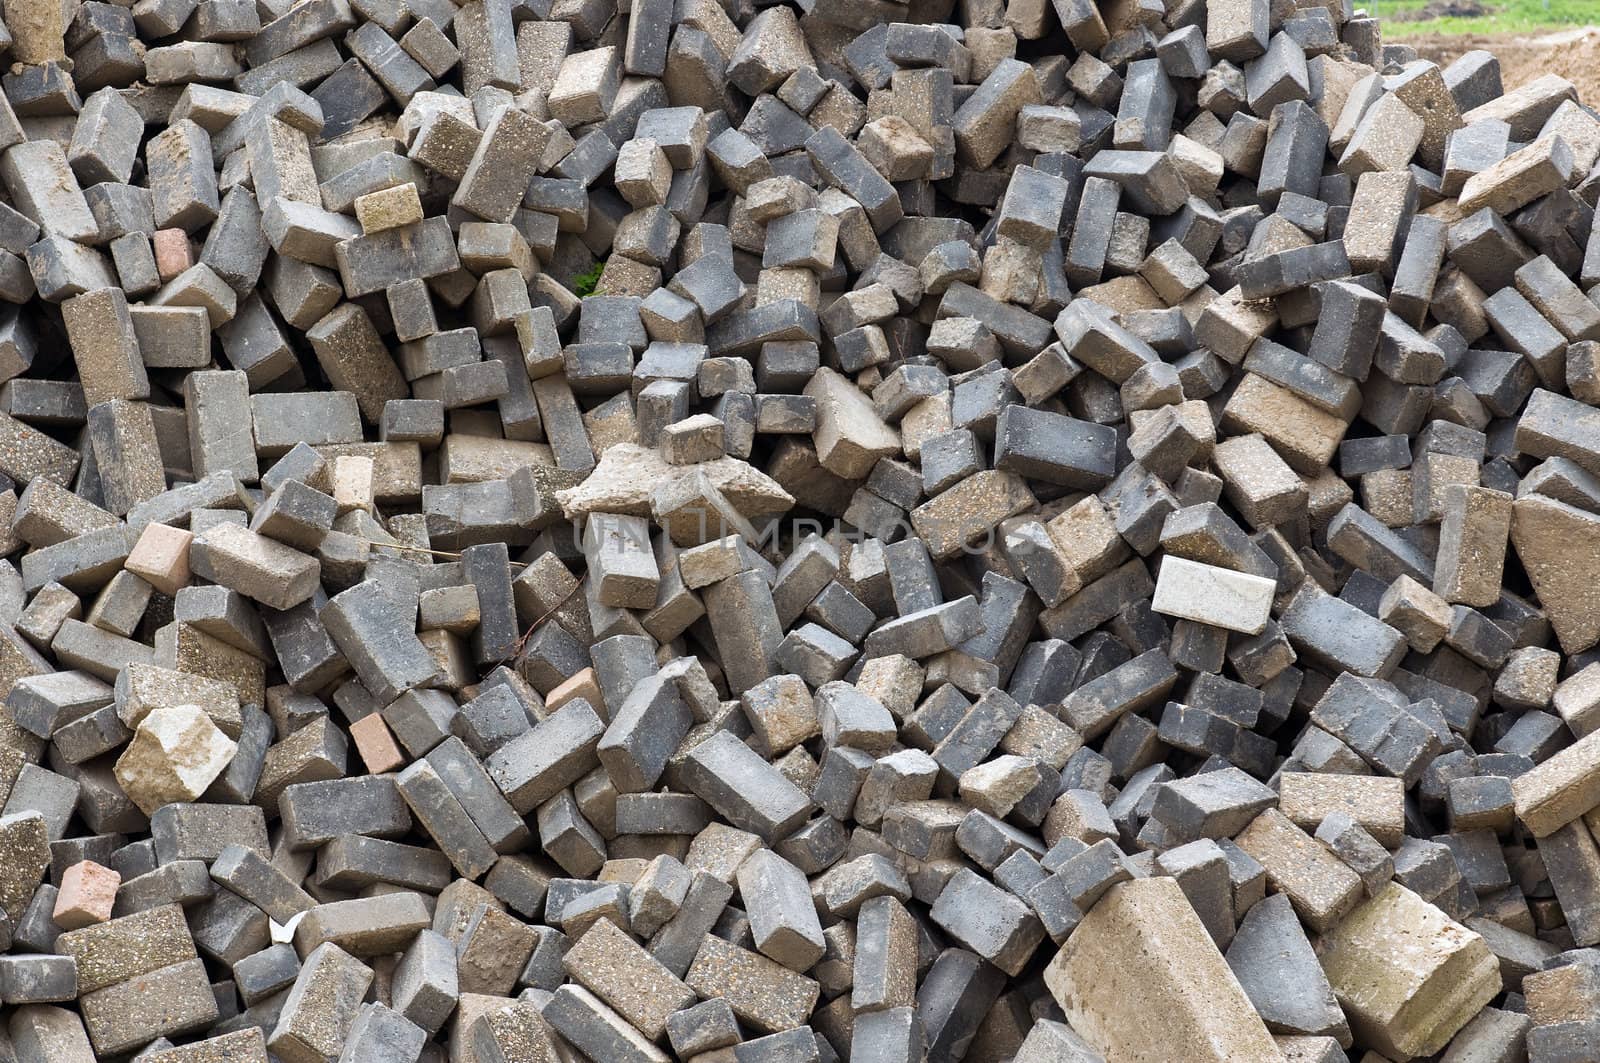 Pile of coble stone bricks